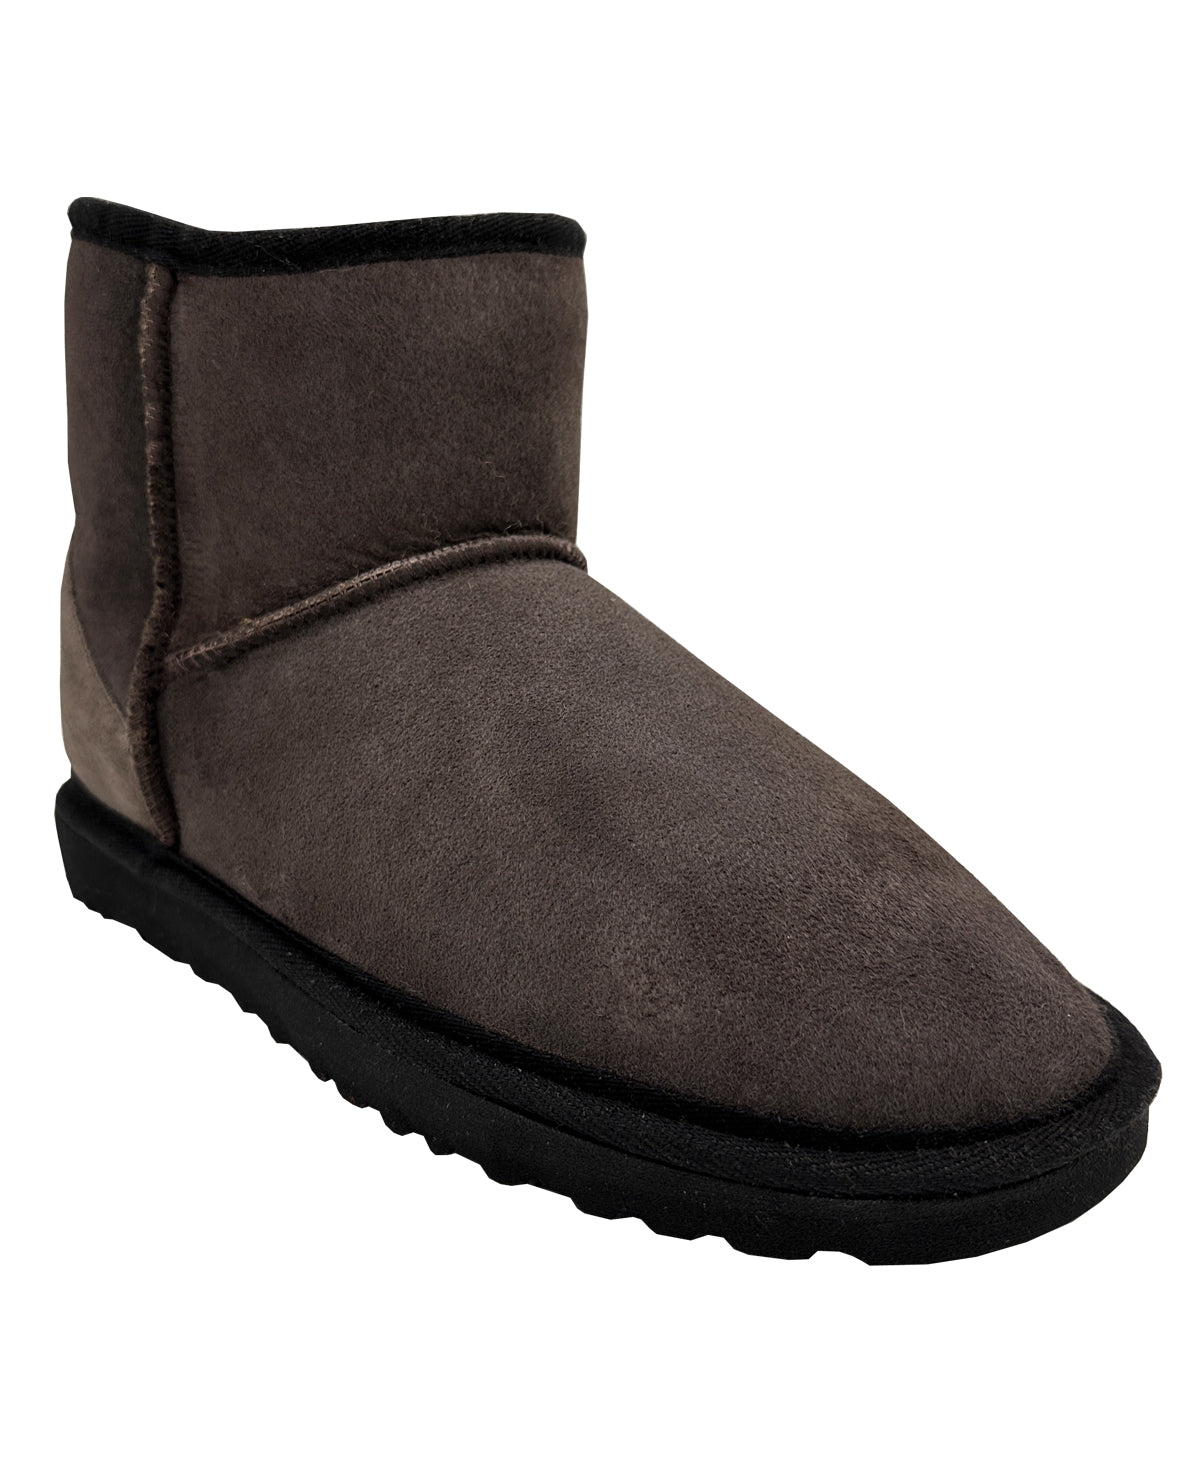 Women's Sheepskin Boots - Brown